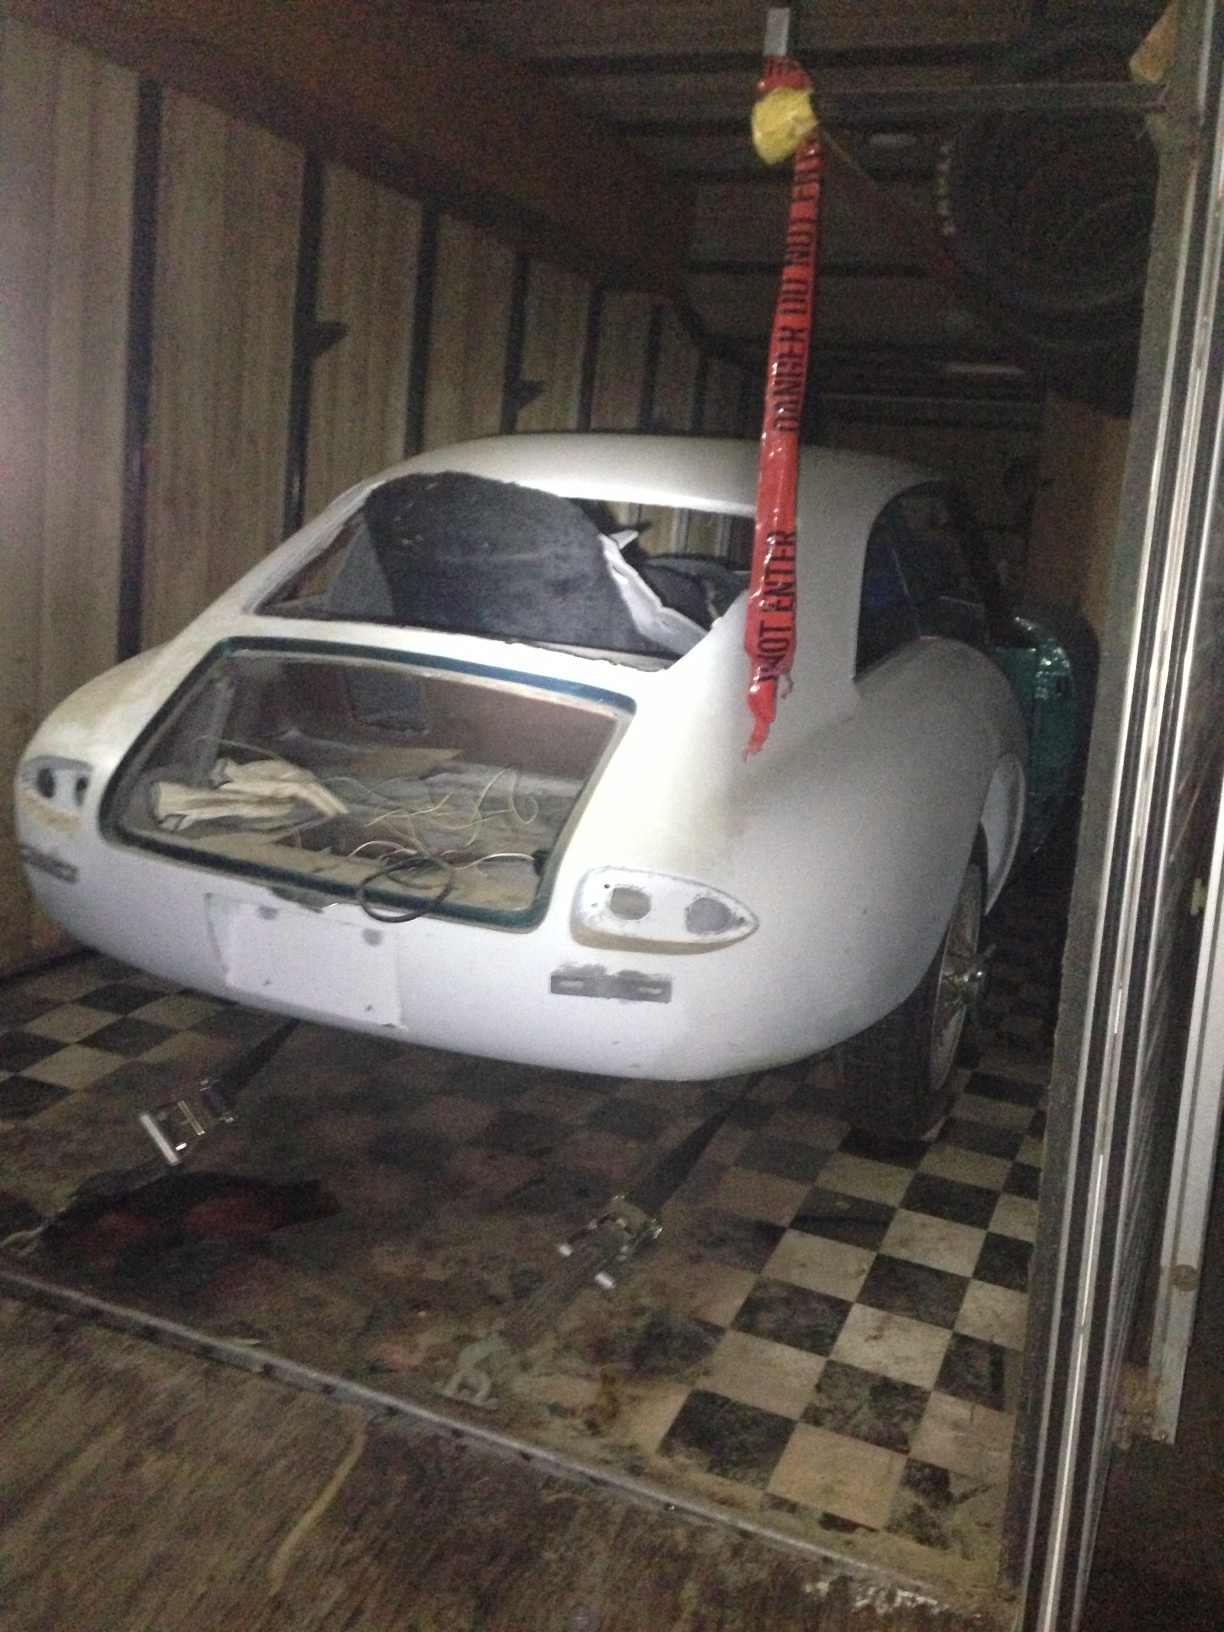 An Apollo GT Found At A Garage Sale